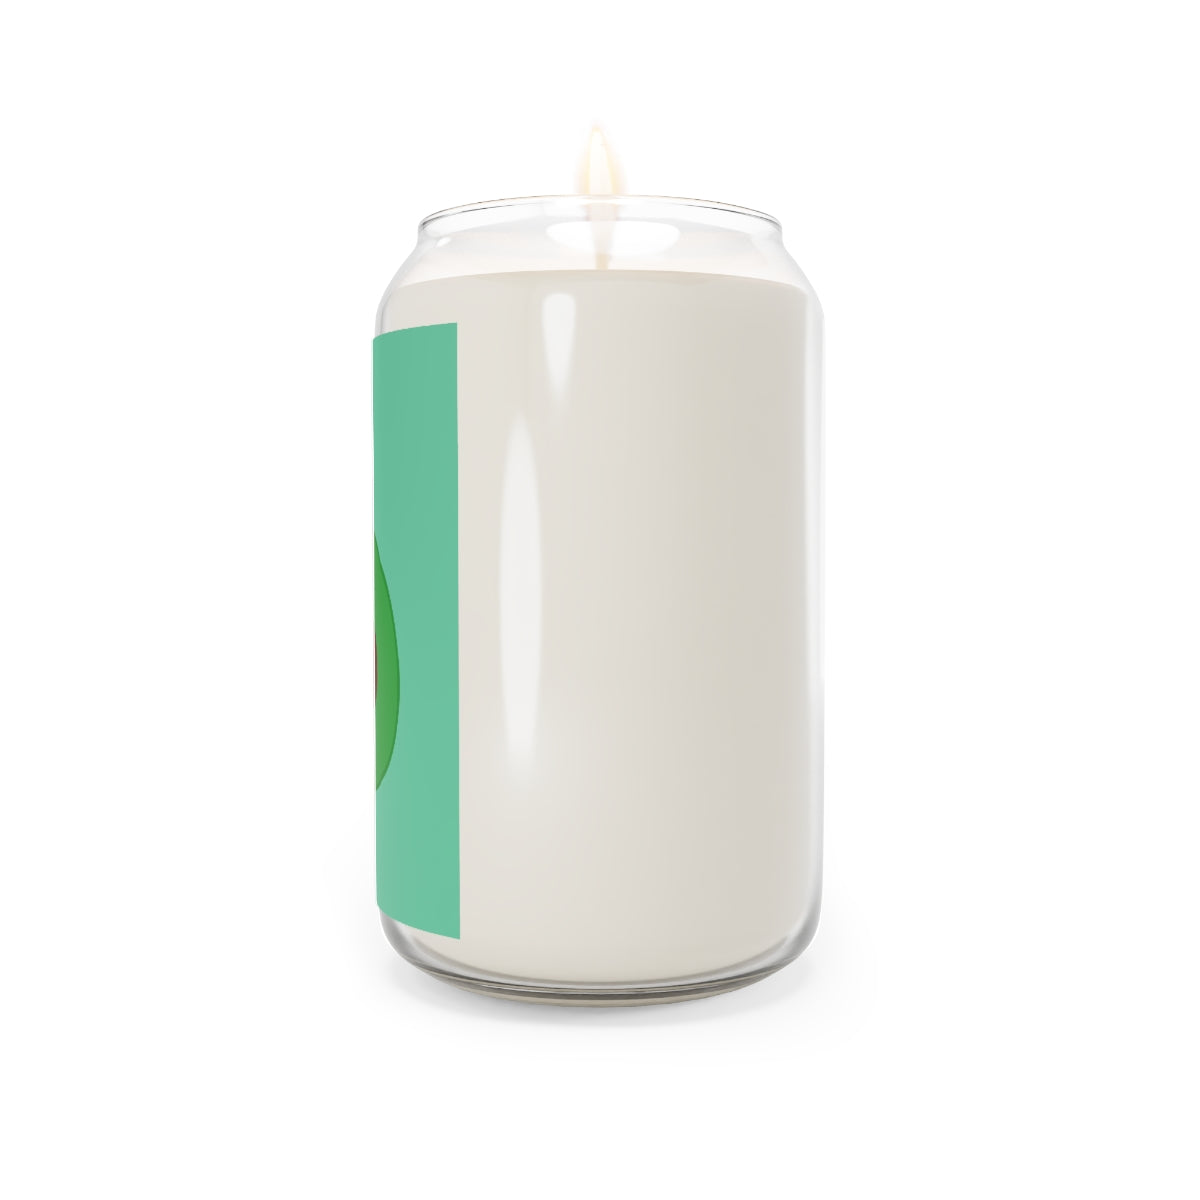 Aromatherapy Natural Soy Wax Candle, 13.75oz “Avocado”